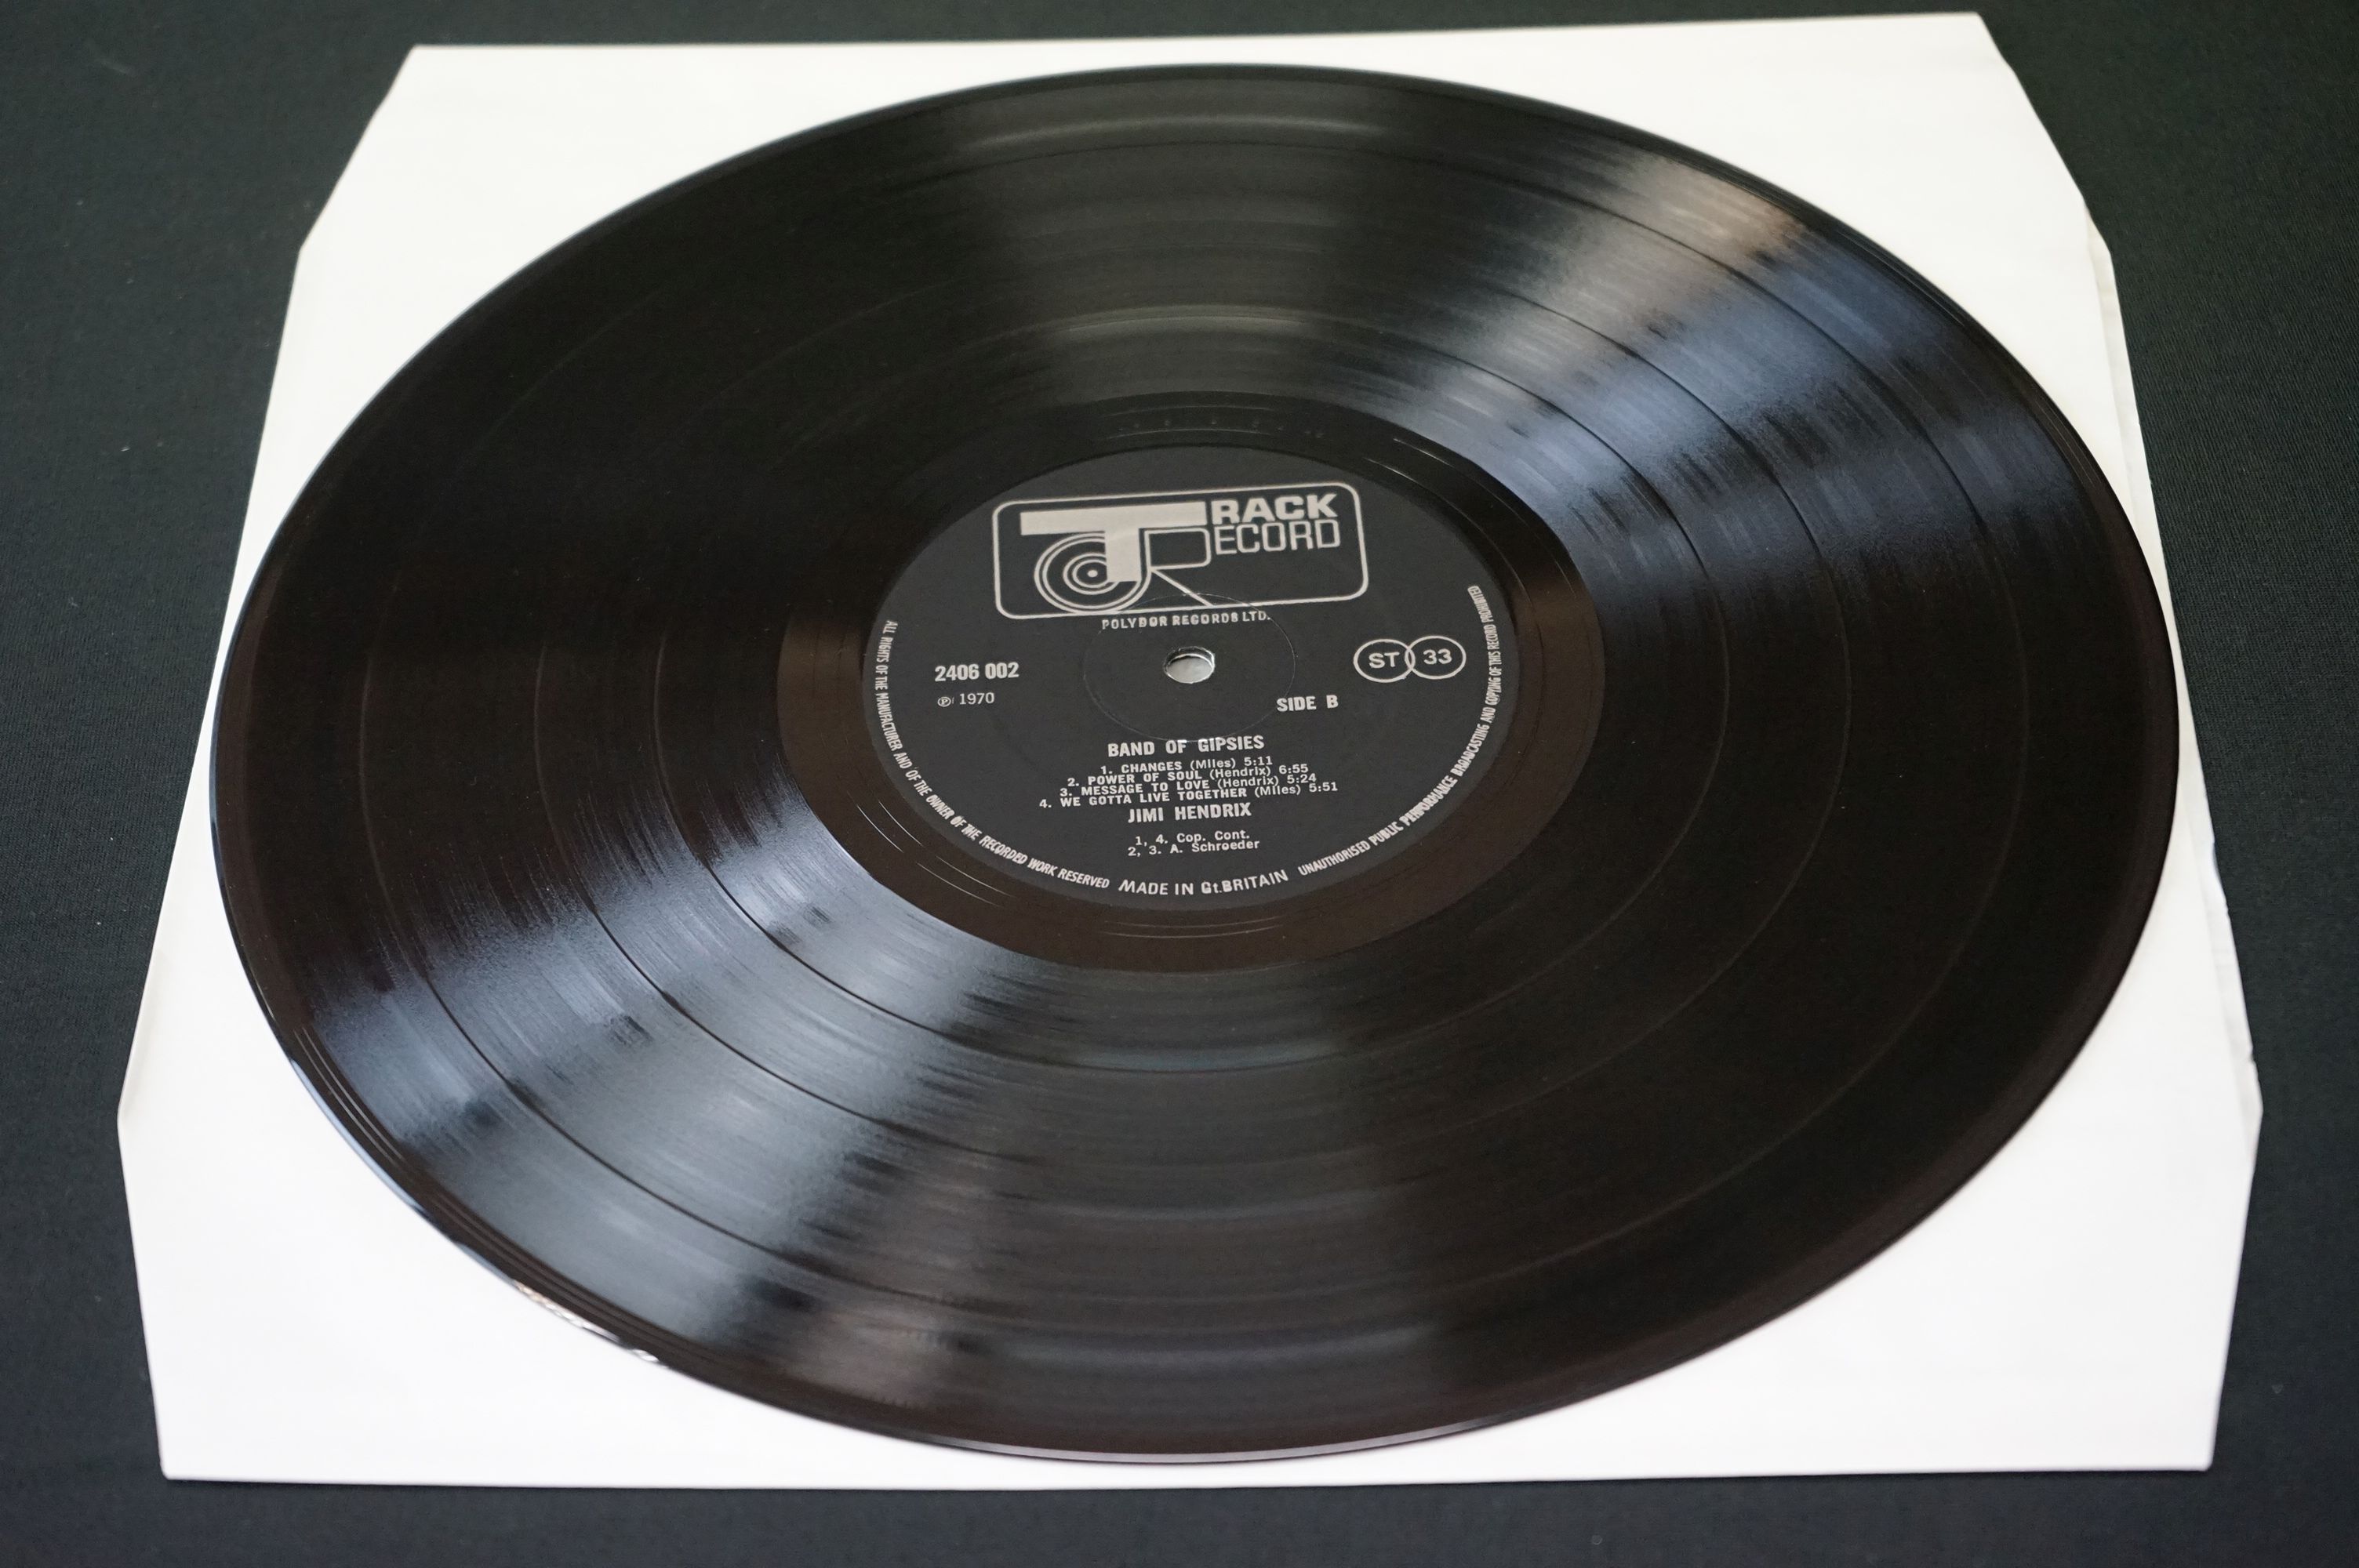 Vinyl - Jimi Hendrix Band Of Gypsys on Track 2406 002 'puppet' sleeve. Vg+ - Image 4 of 6